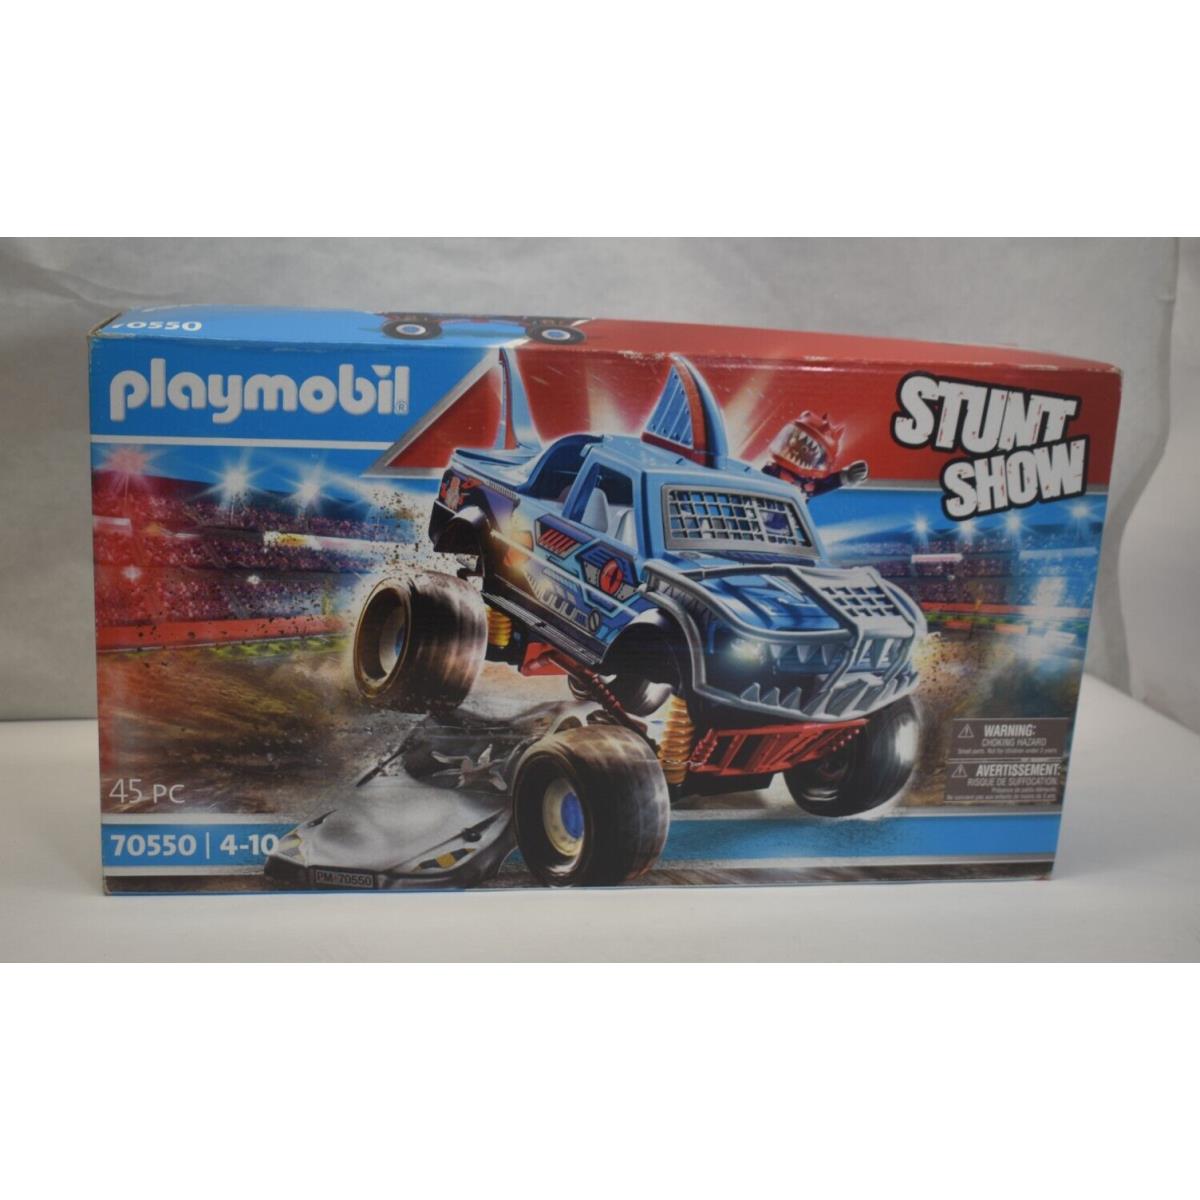 Playmobil 70550 Stunt Show Shark Monster Truck 45 Piece Toy Playset Kids Gift